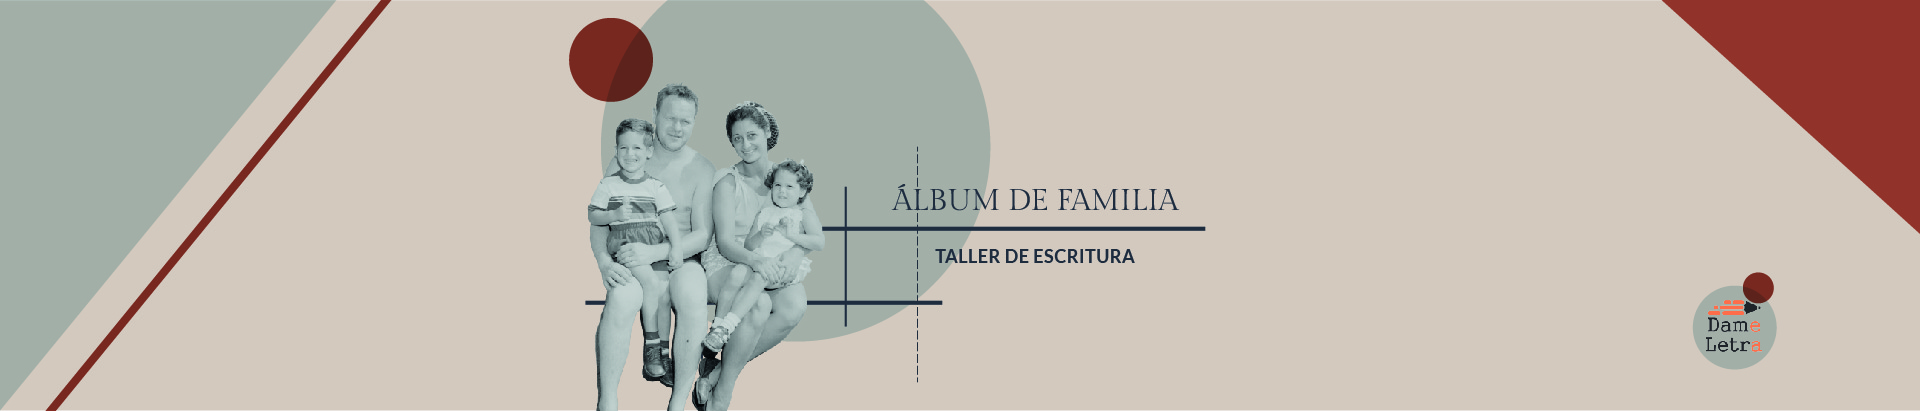 Banner taller de Album de Familia